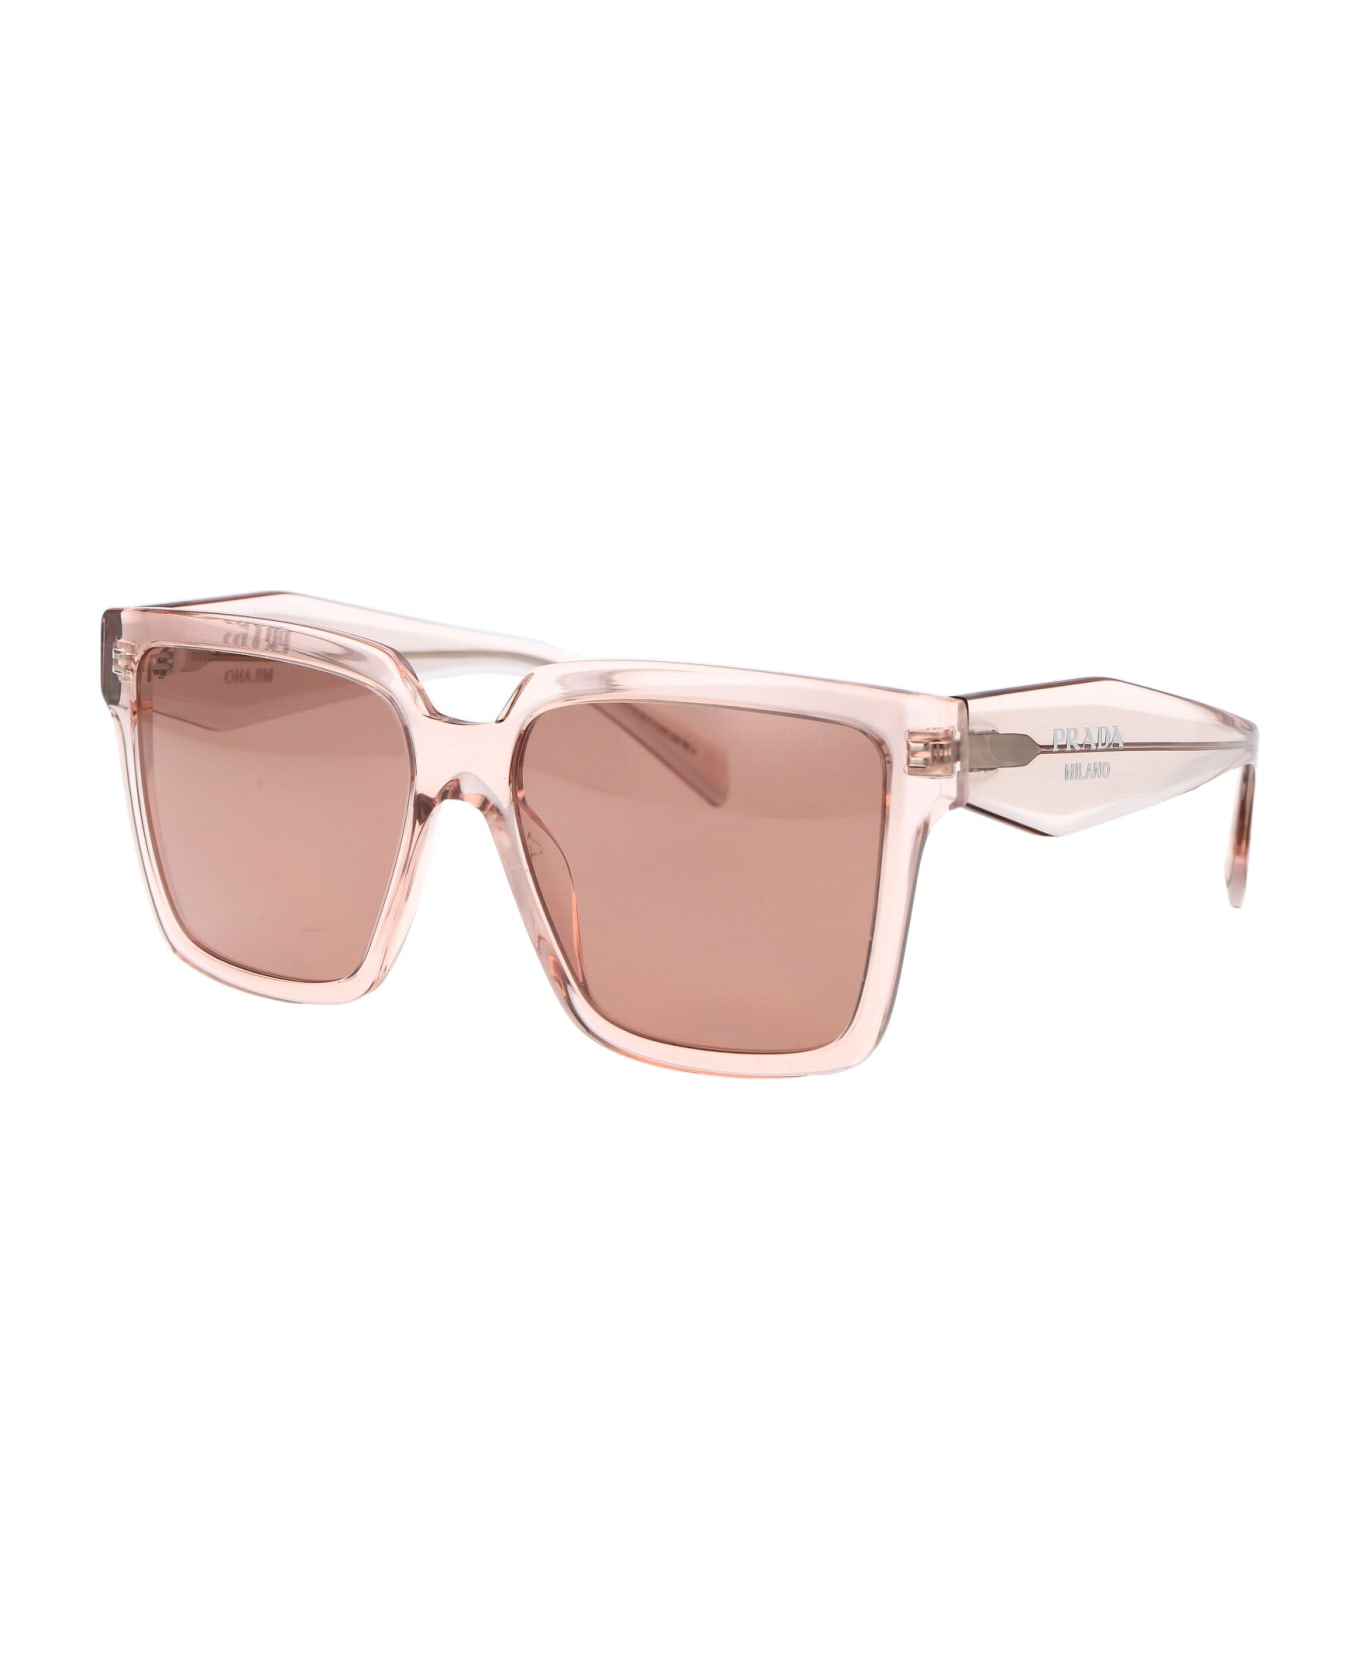 Prada Eyewear 0pr 24zs Sunglasses - 13I08M Geranium/Petal Crystal